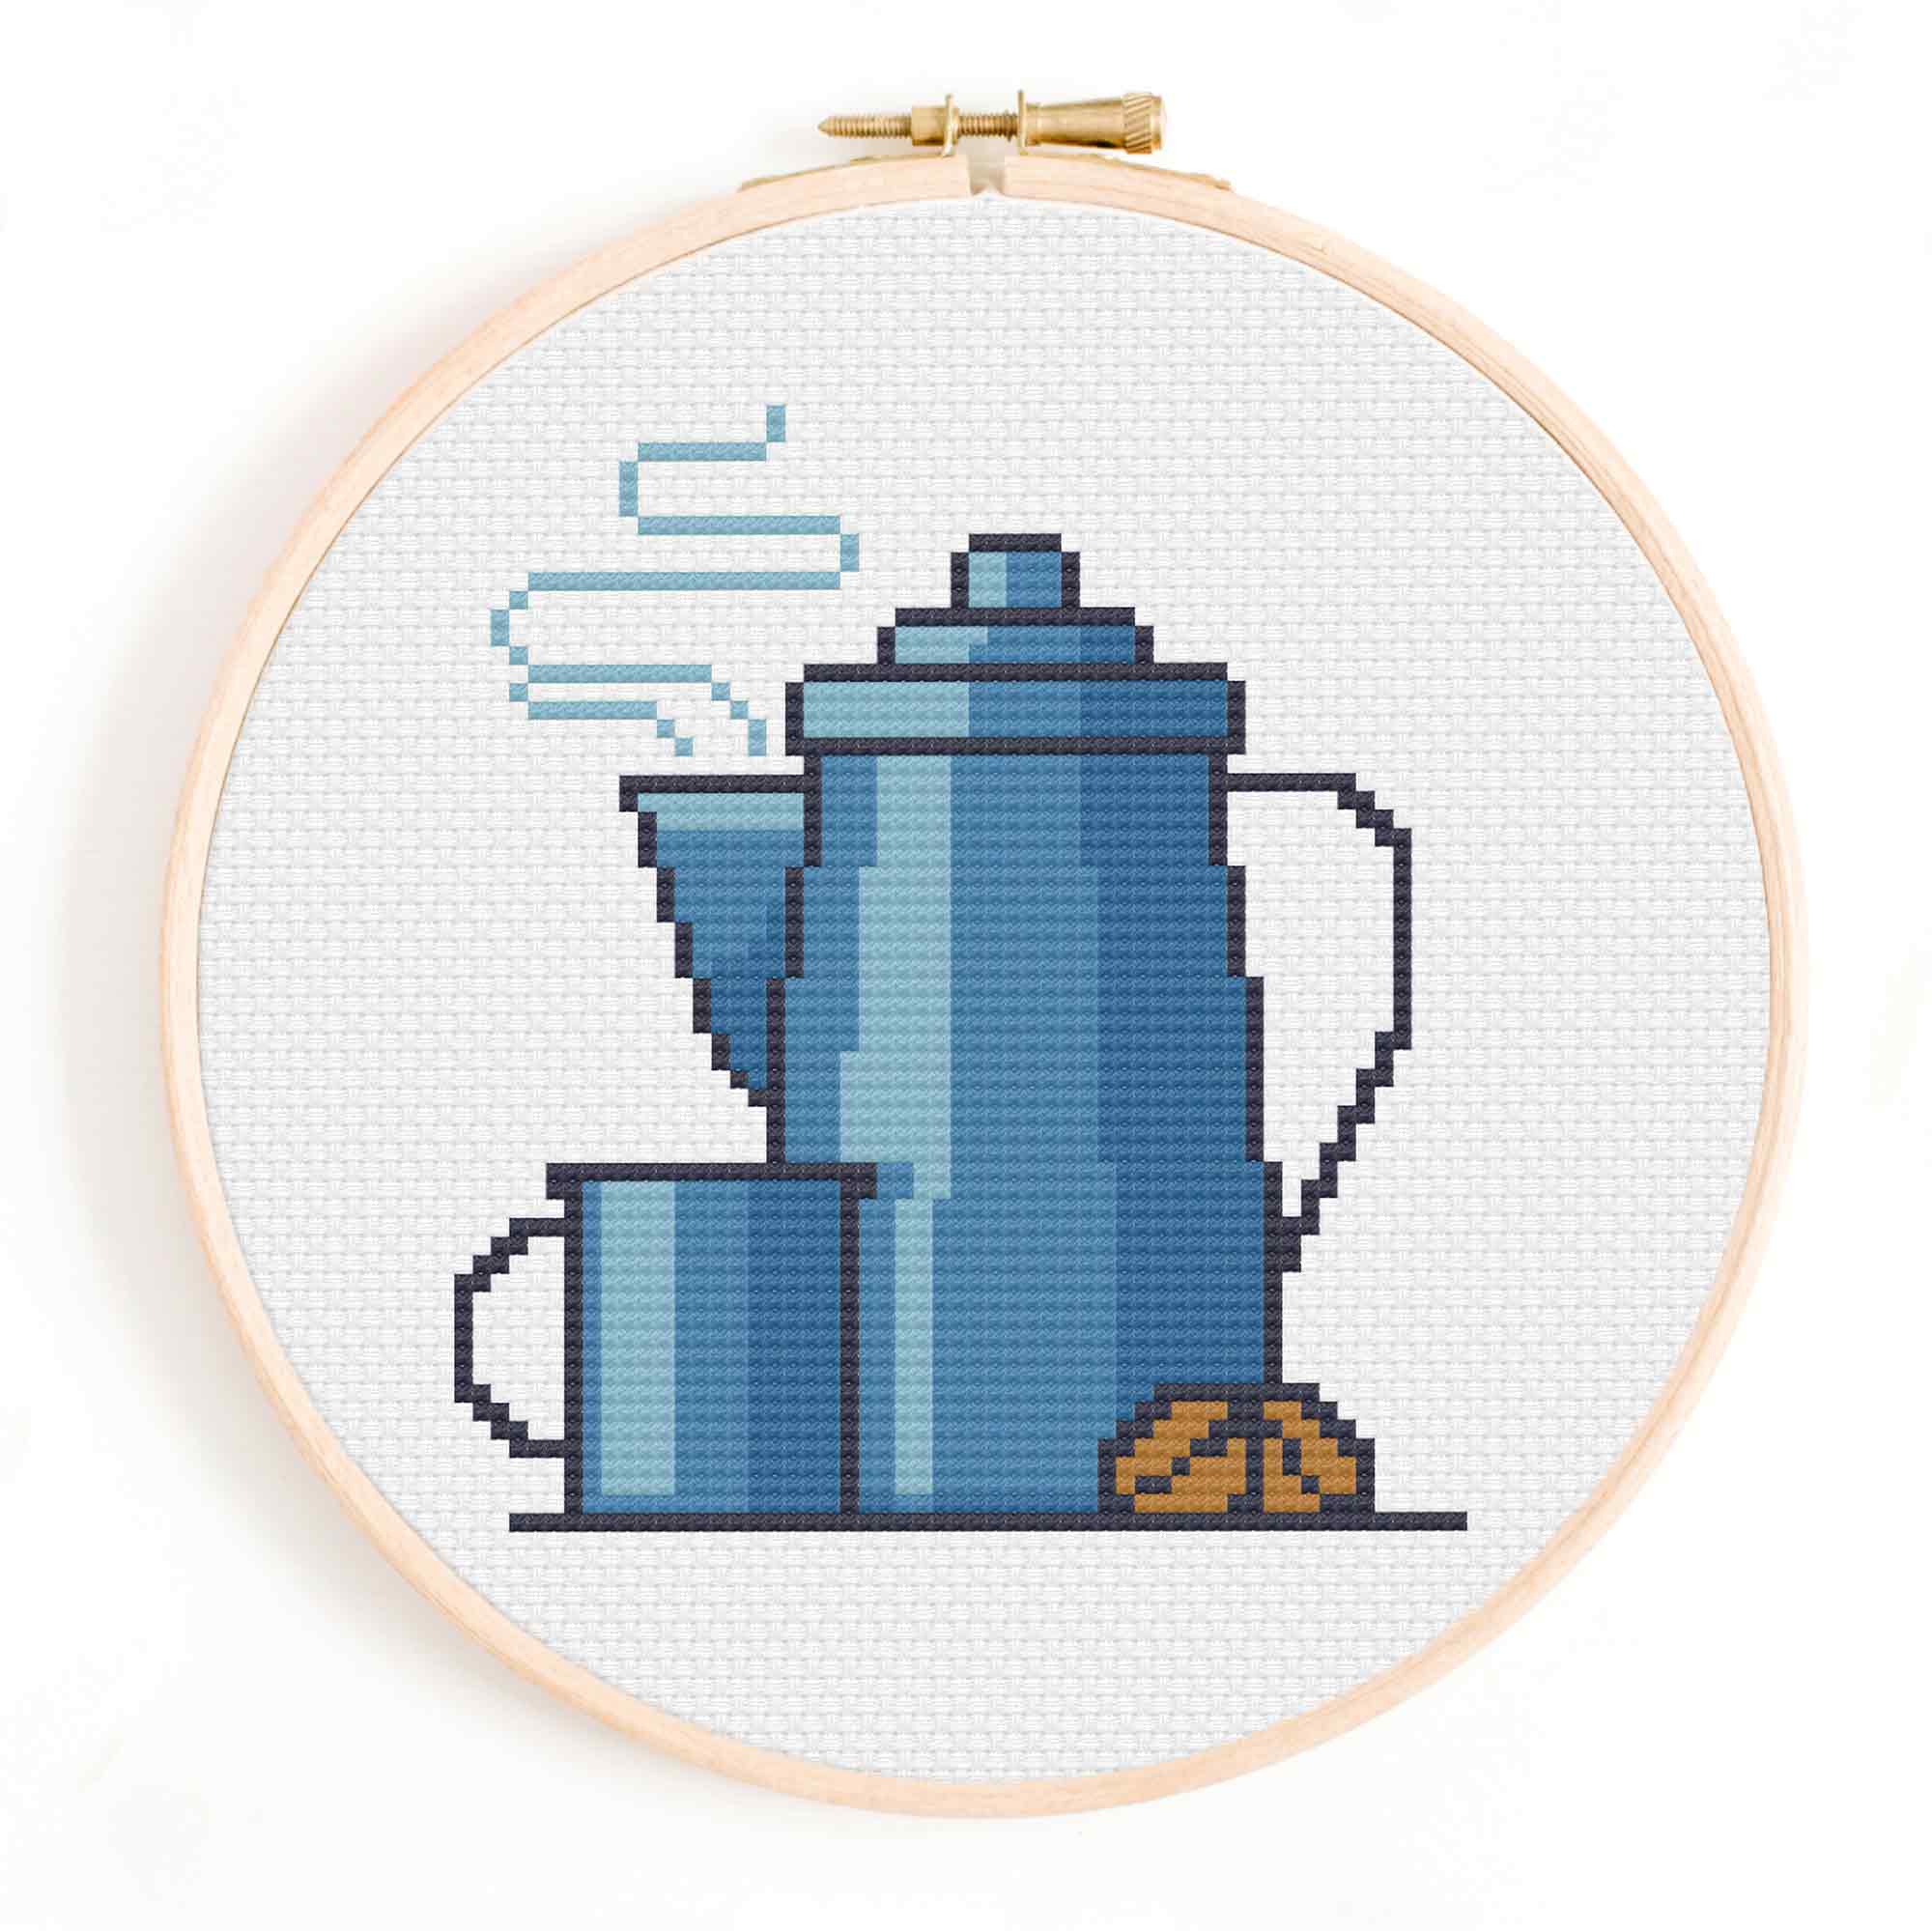 Old Fashioned Coffee Pot Machine Embroidery Design 